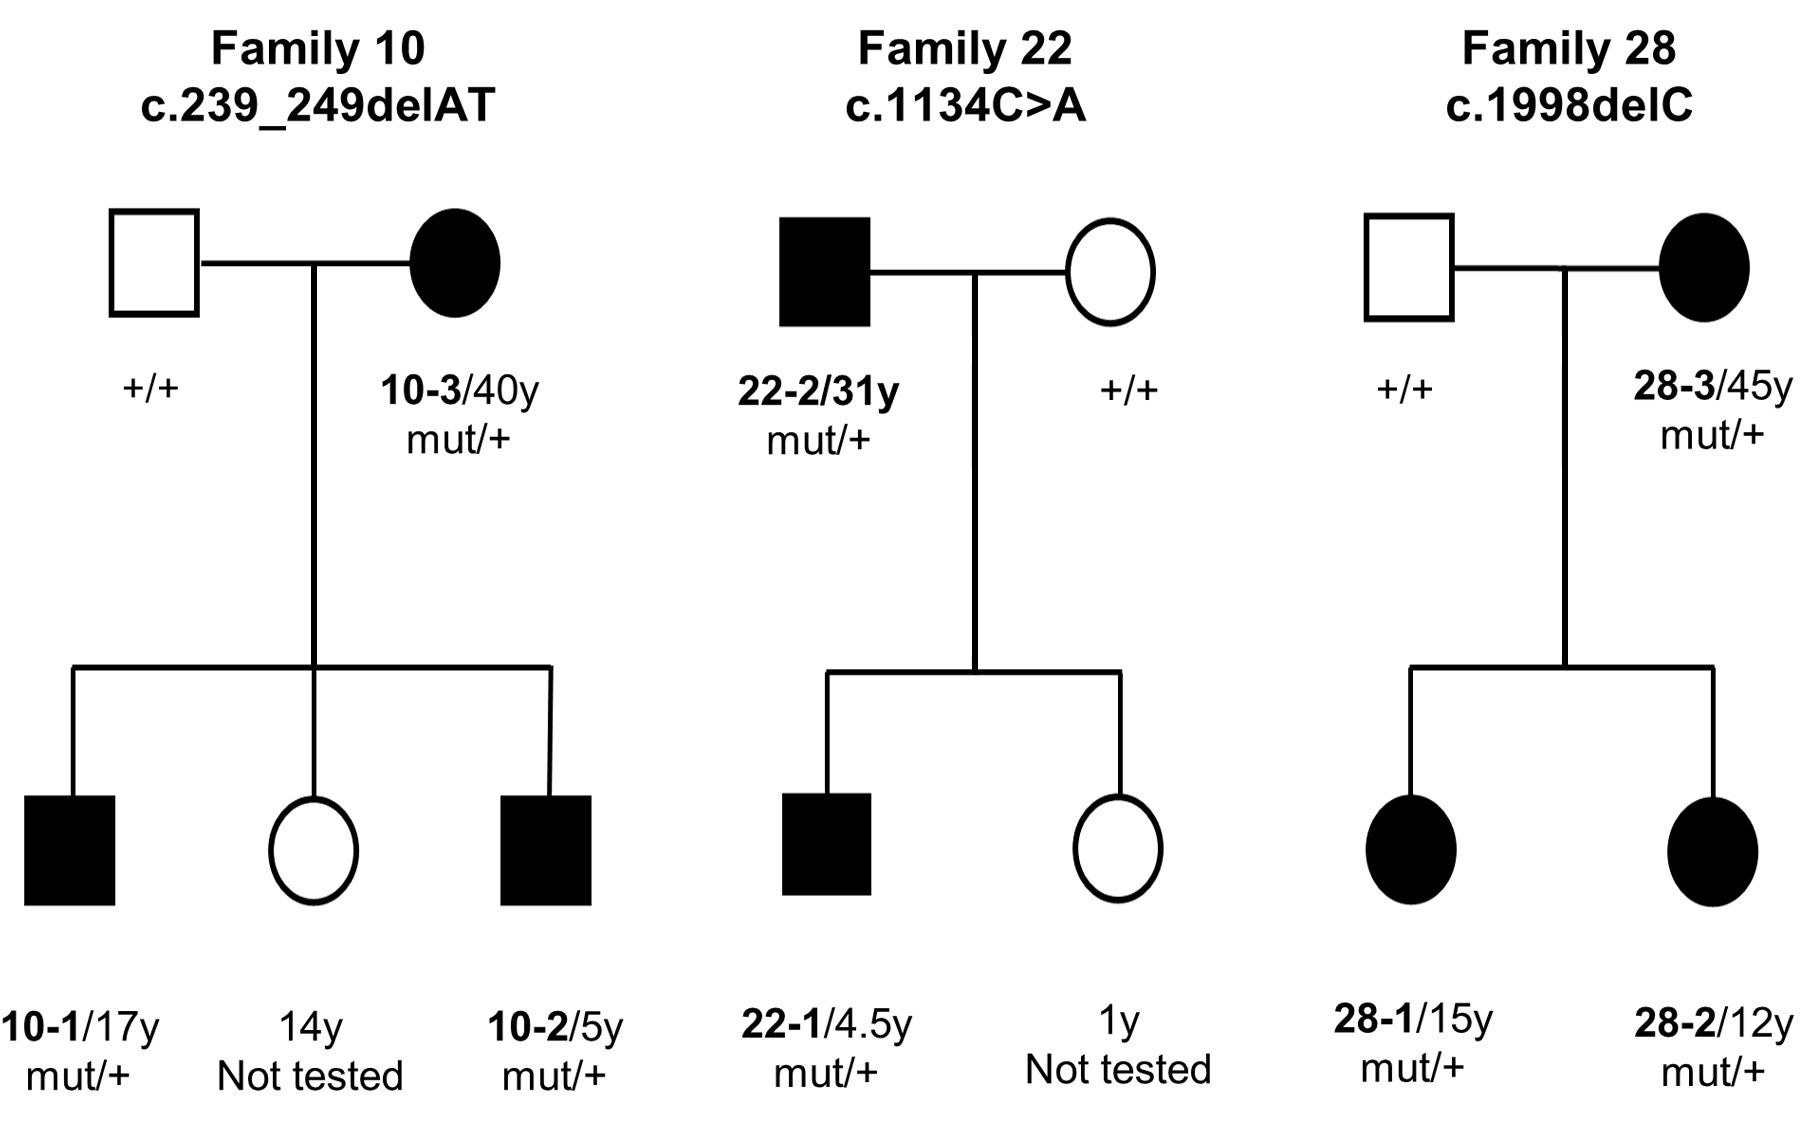 Pedigree Chart For Family History Of Genetic Disorder